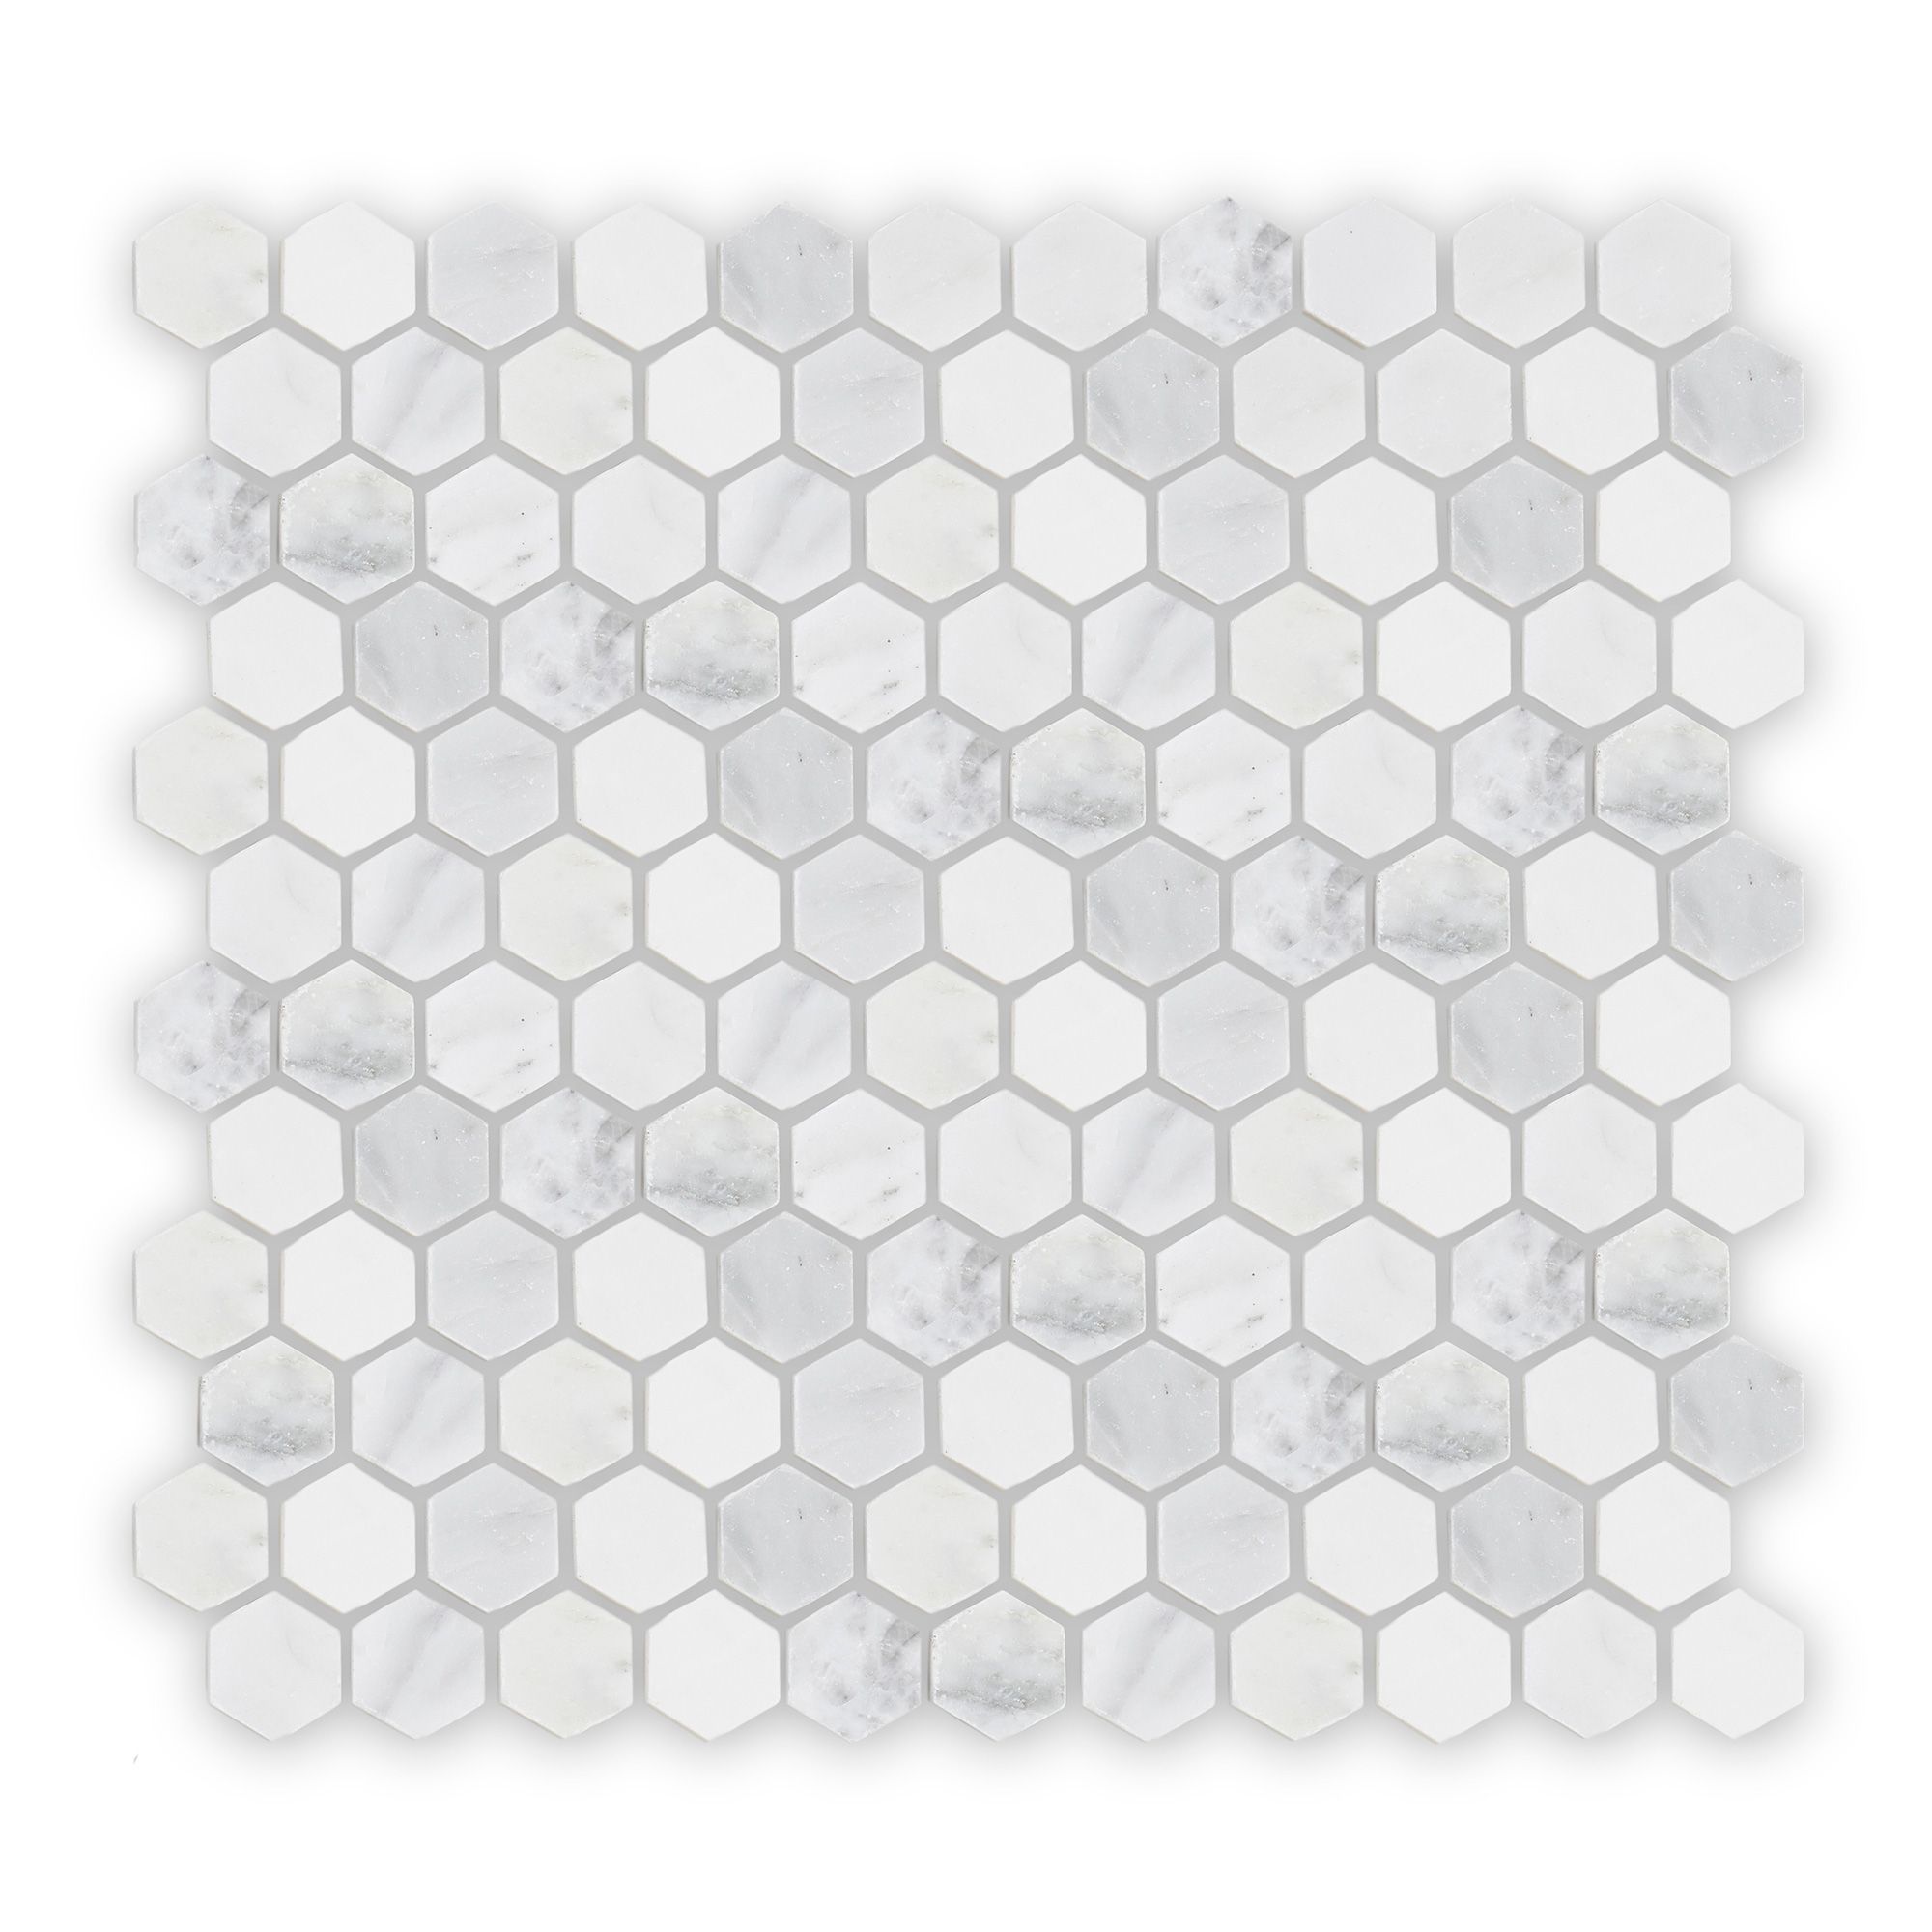 East Hampton Hexagonal Mosaic, Honed